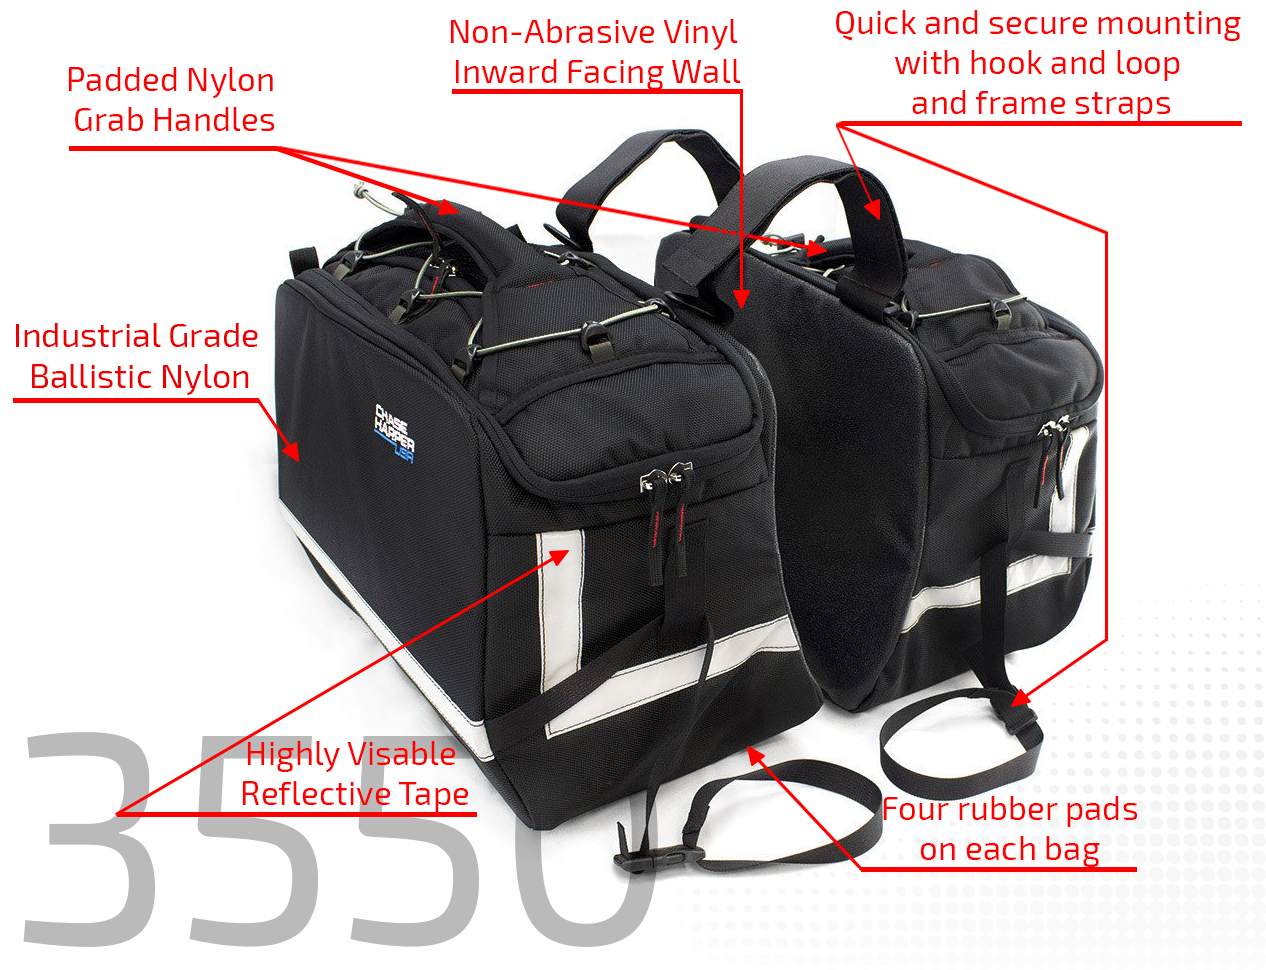 3550BCNW Aeropac II Saddle bags